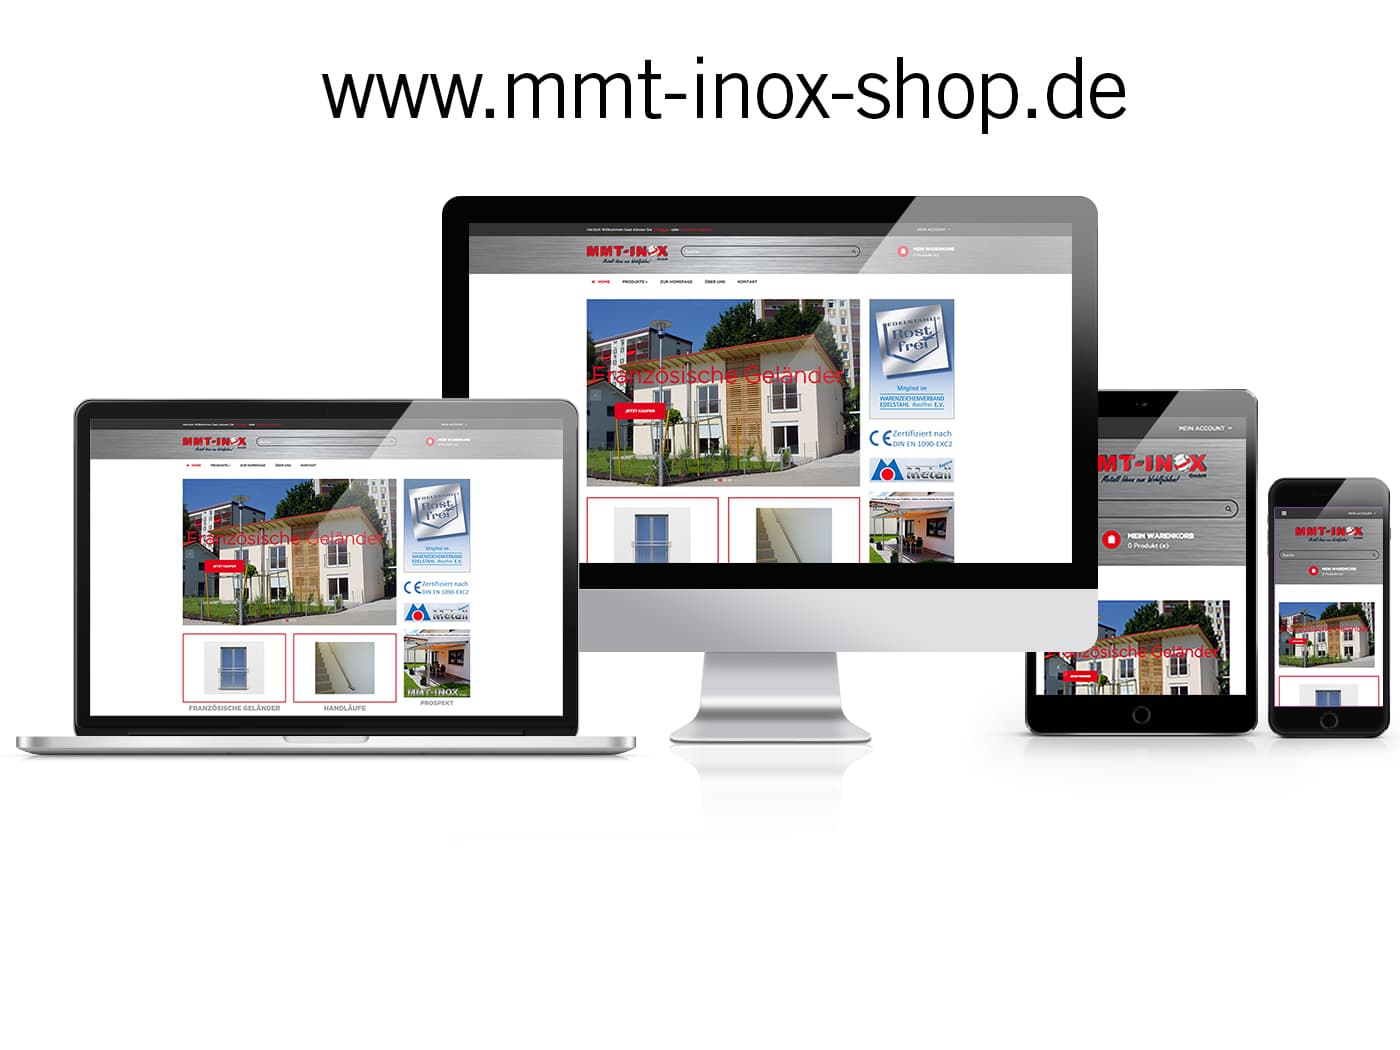 Prestashop Online-Shop MMT Inox GmbH